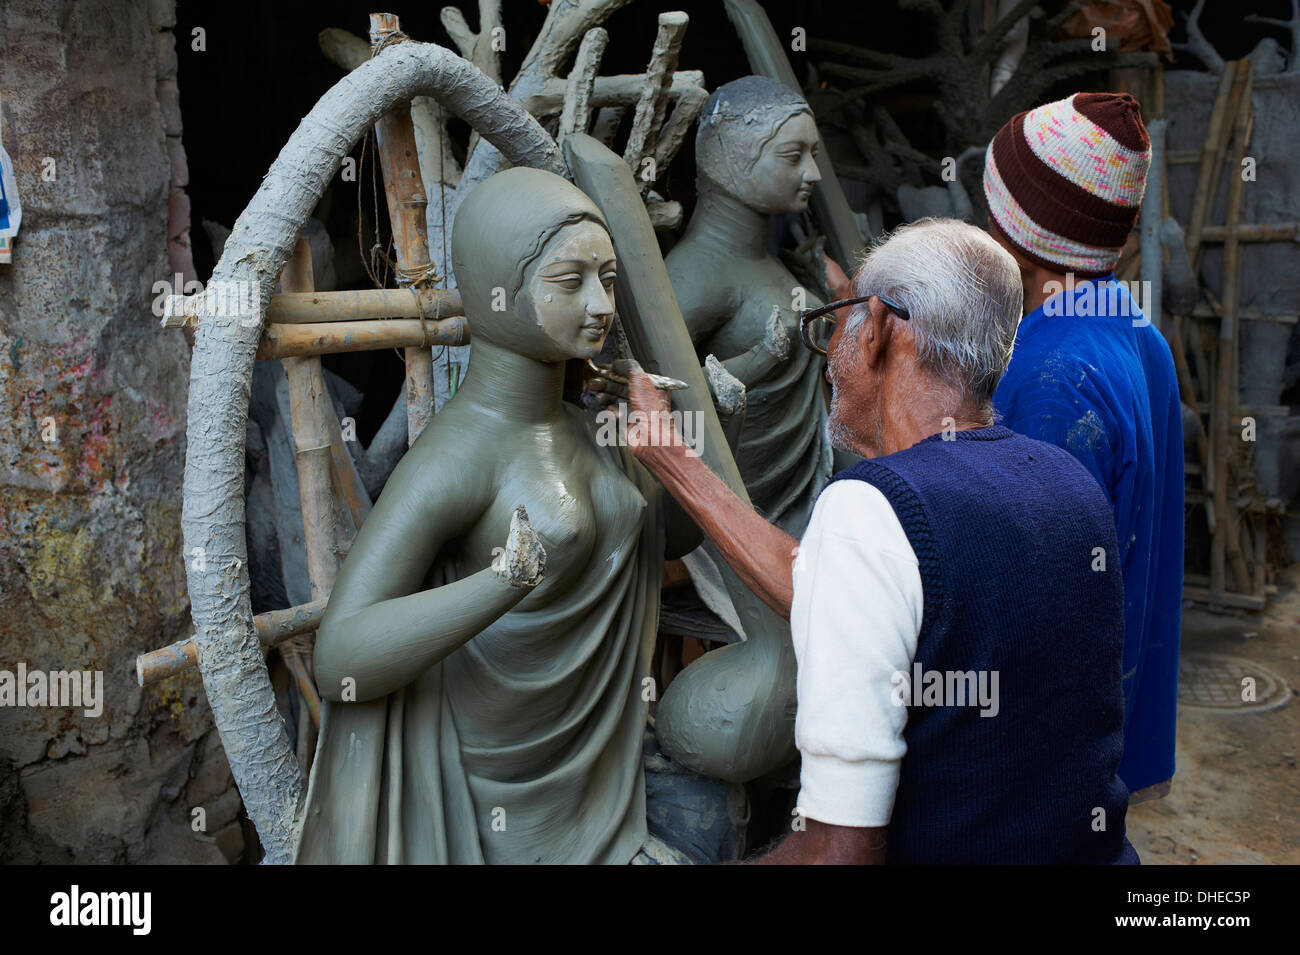 India, West Bengal, Kolkata, Calcutta, Kumartulli district, clay idols of Hindu gods and goddesses, statue Stock Photo